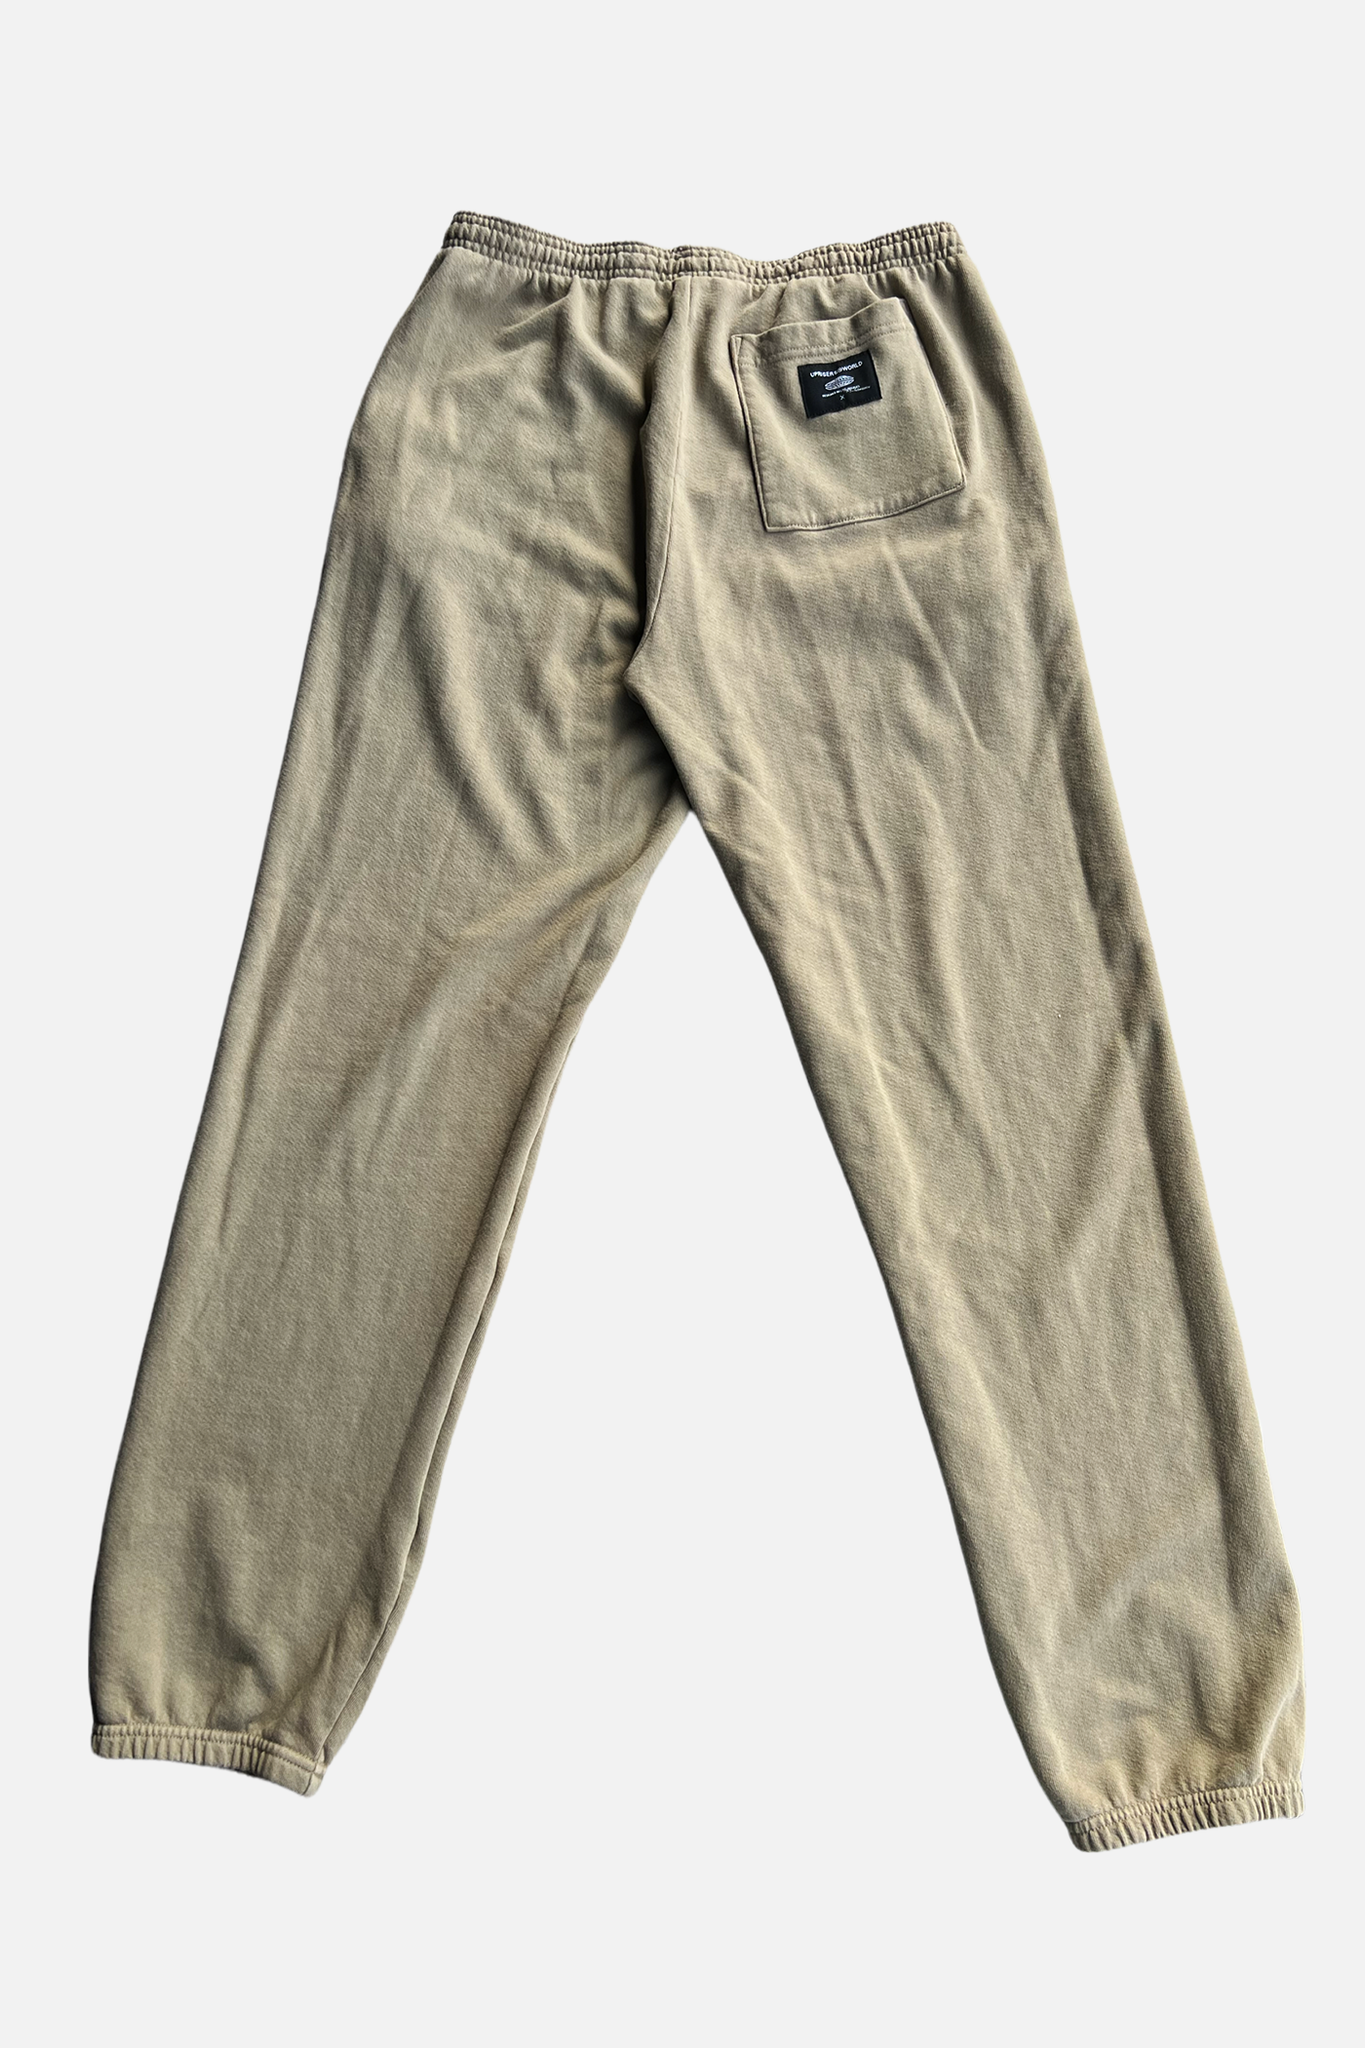 Uprisers.World Upcycled Cargo Pocket Sweatpants - WEAREUPRISERS